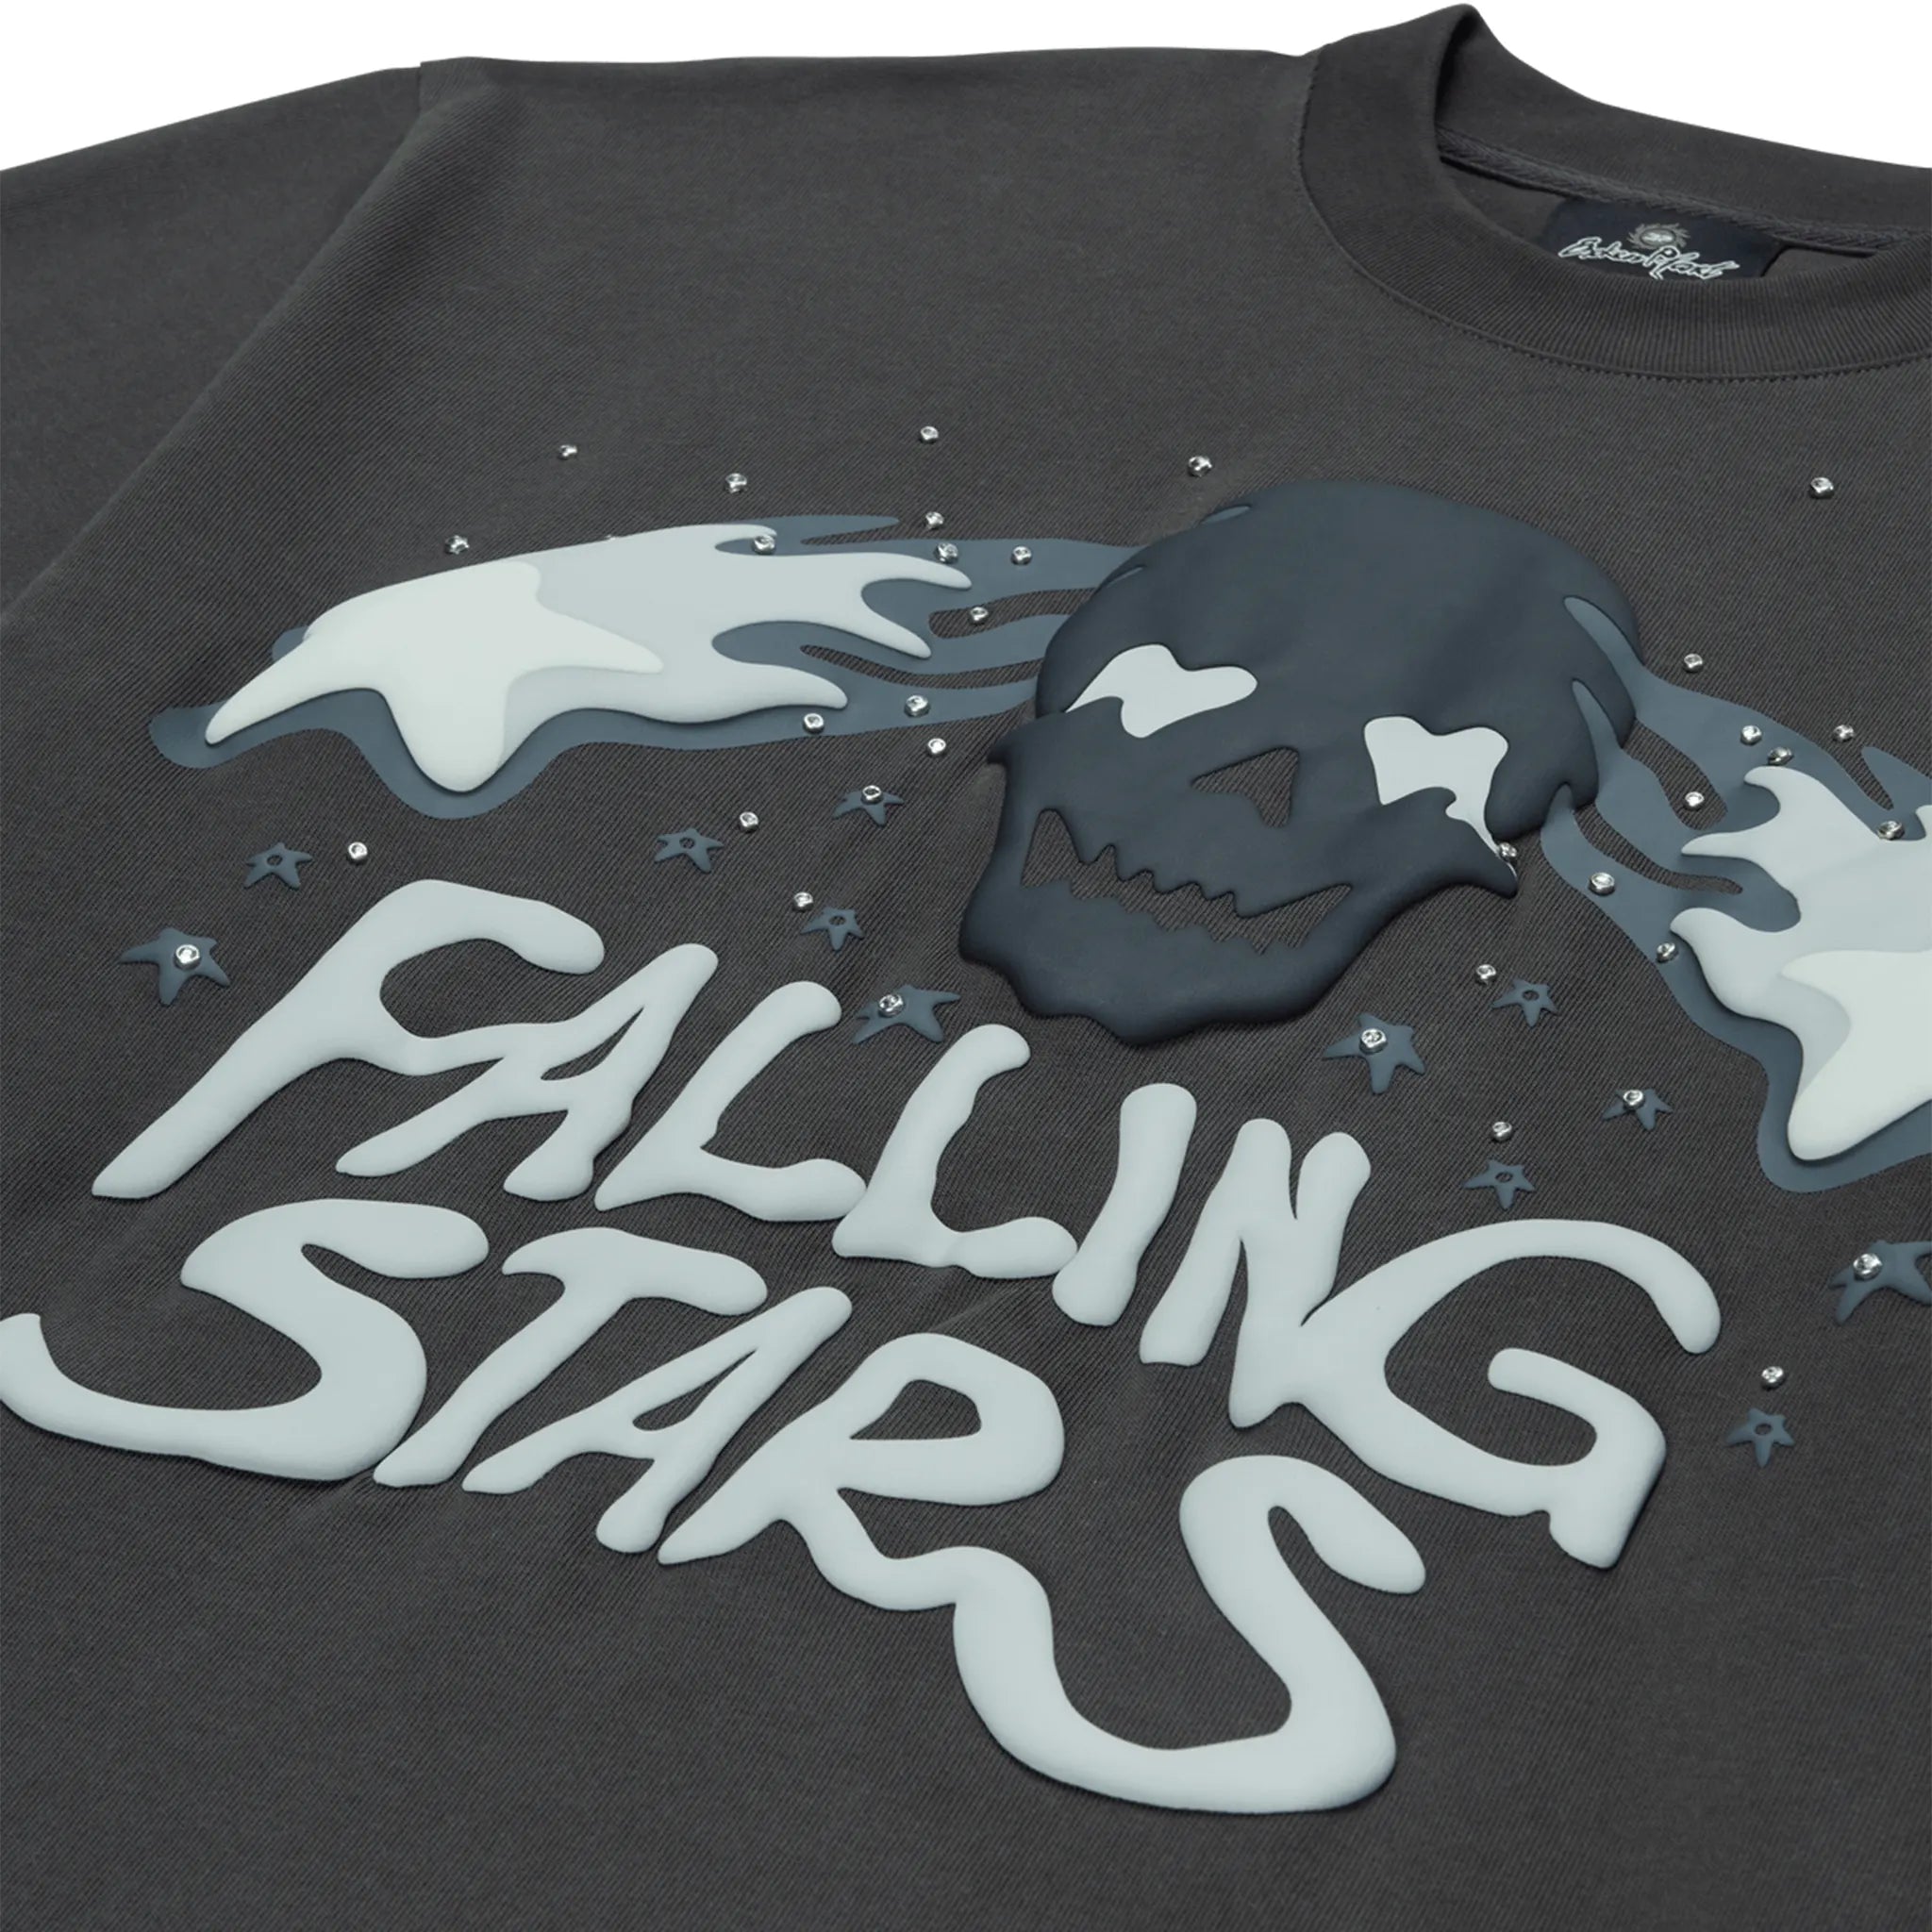 Detail view of Broken Planet Falling Stars Soot Black T Shirt